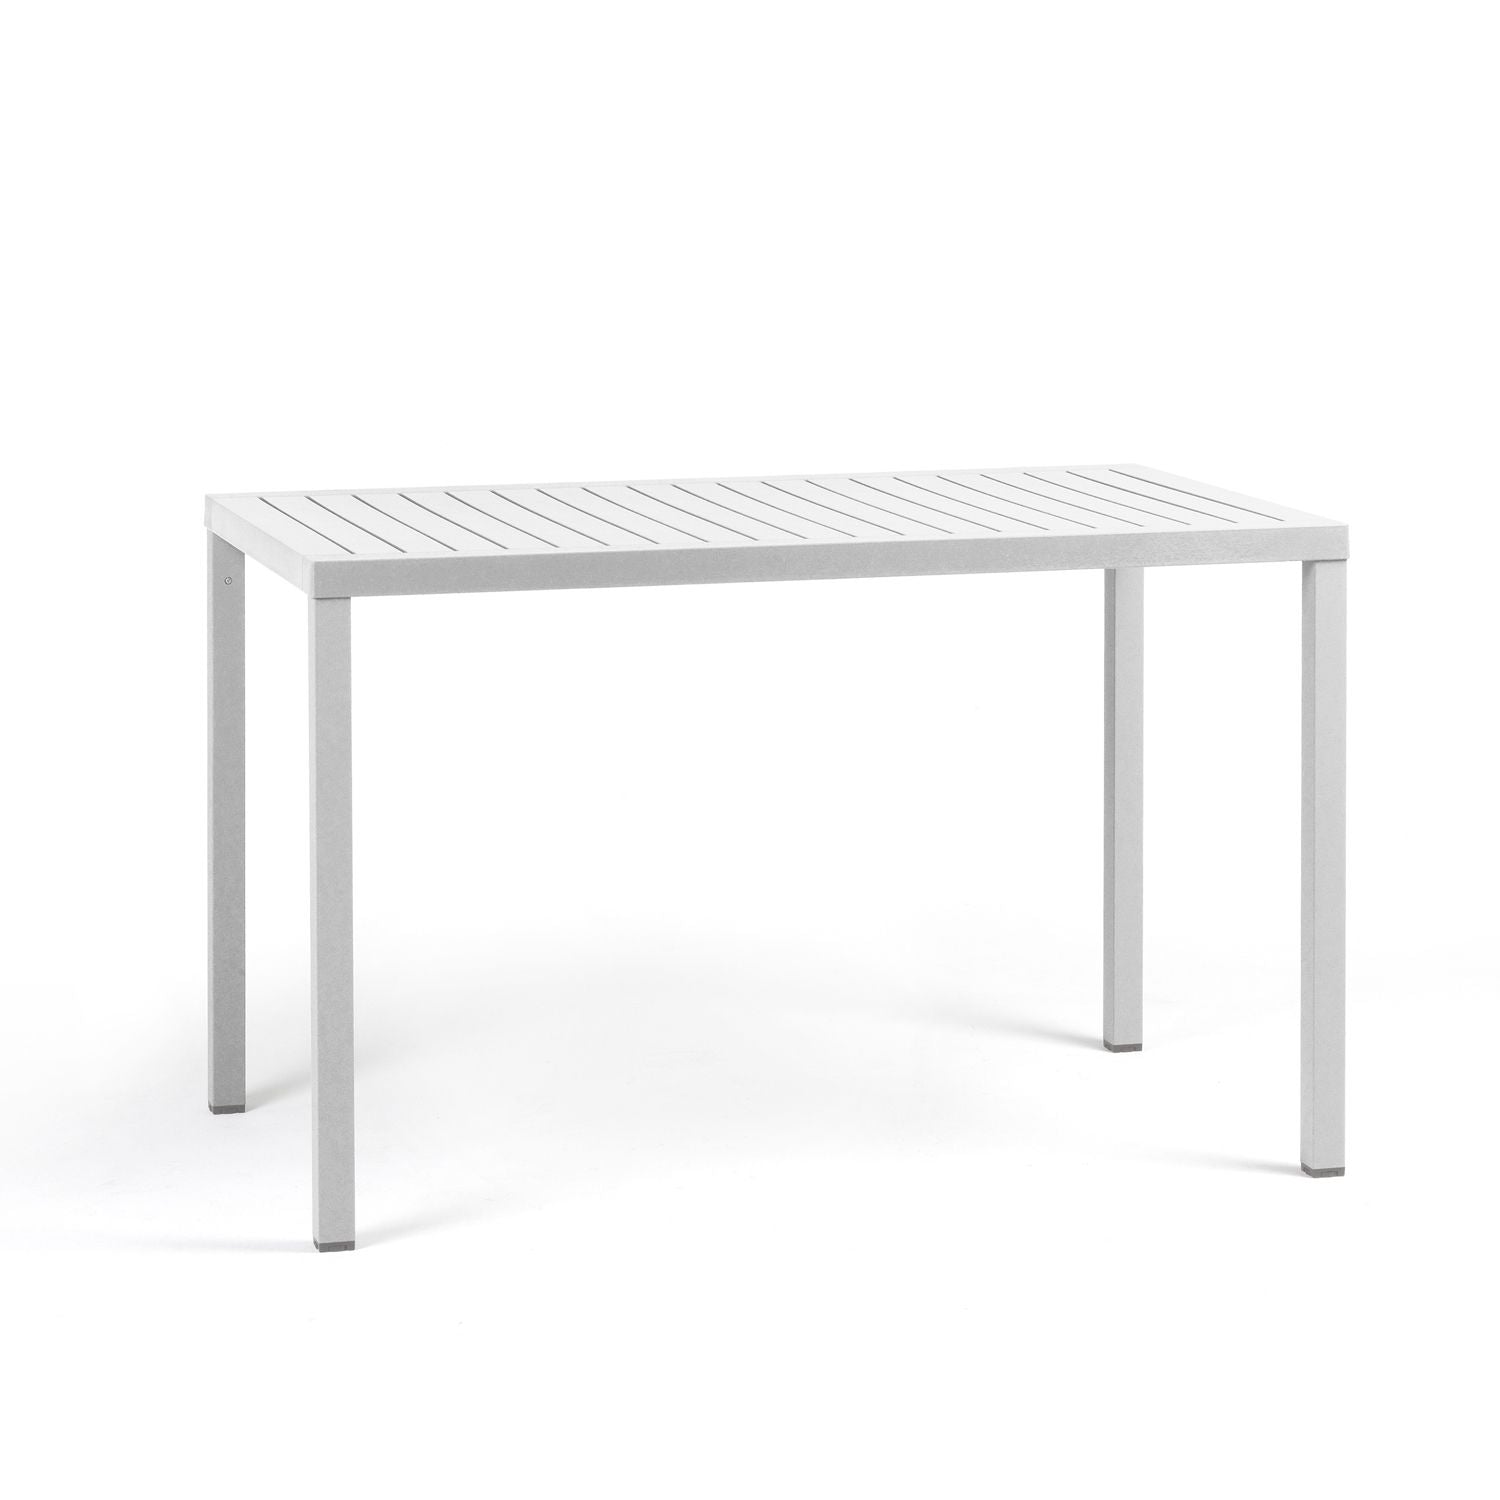 Cube 120x70 Garden Table By Nardi - White